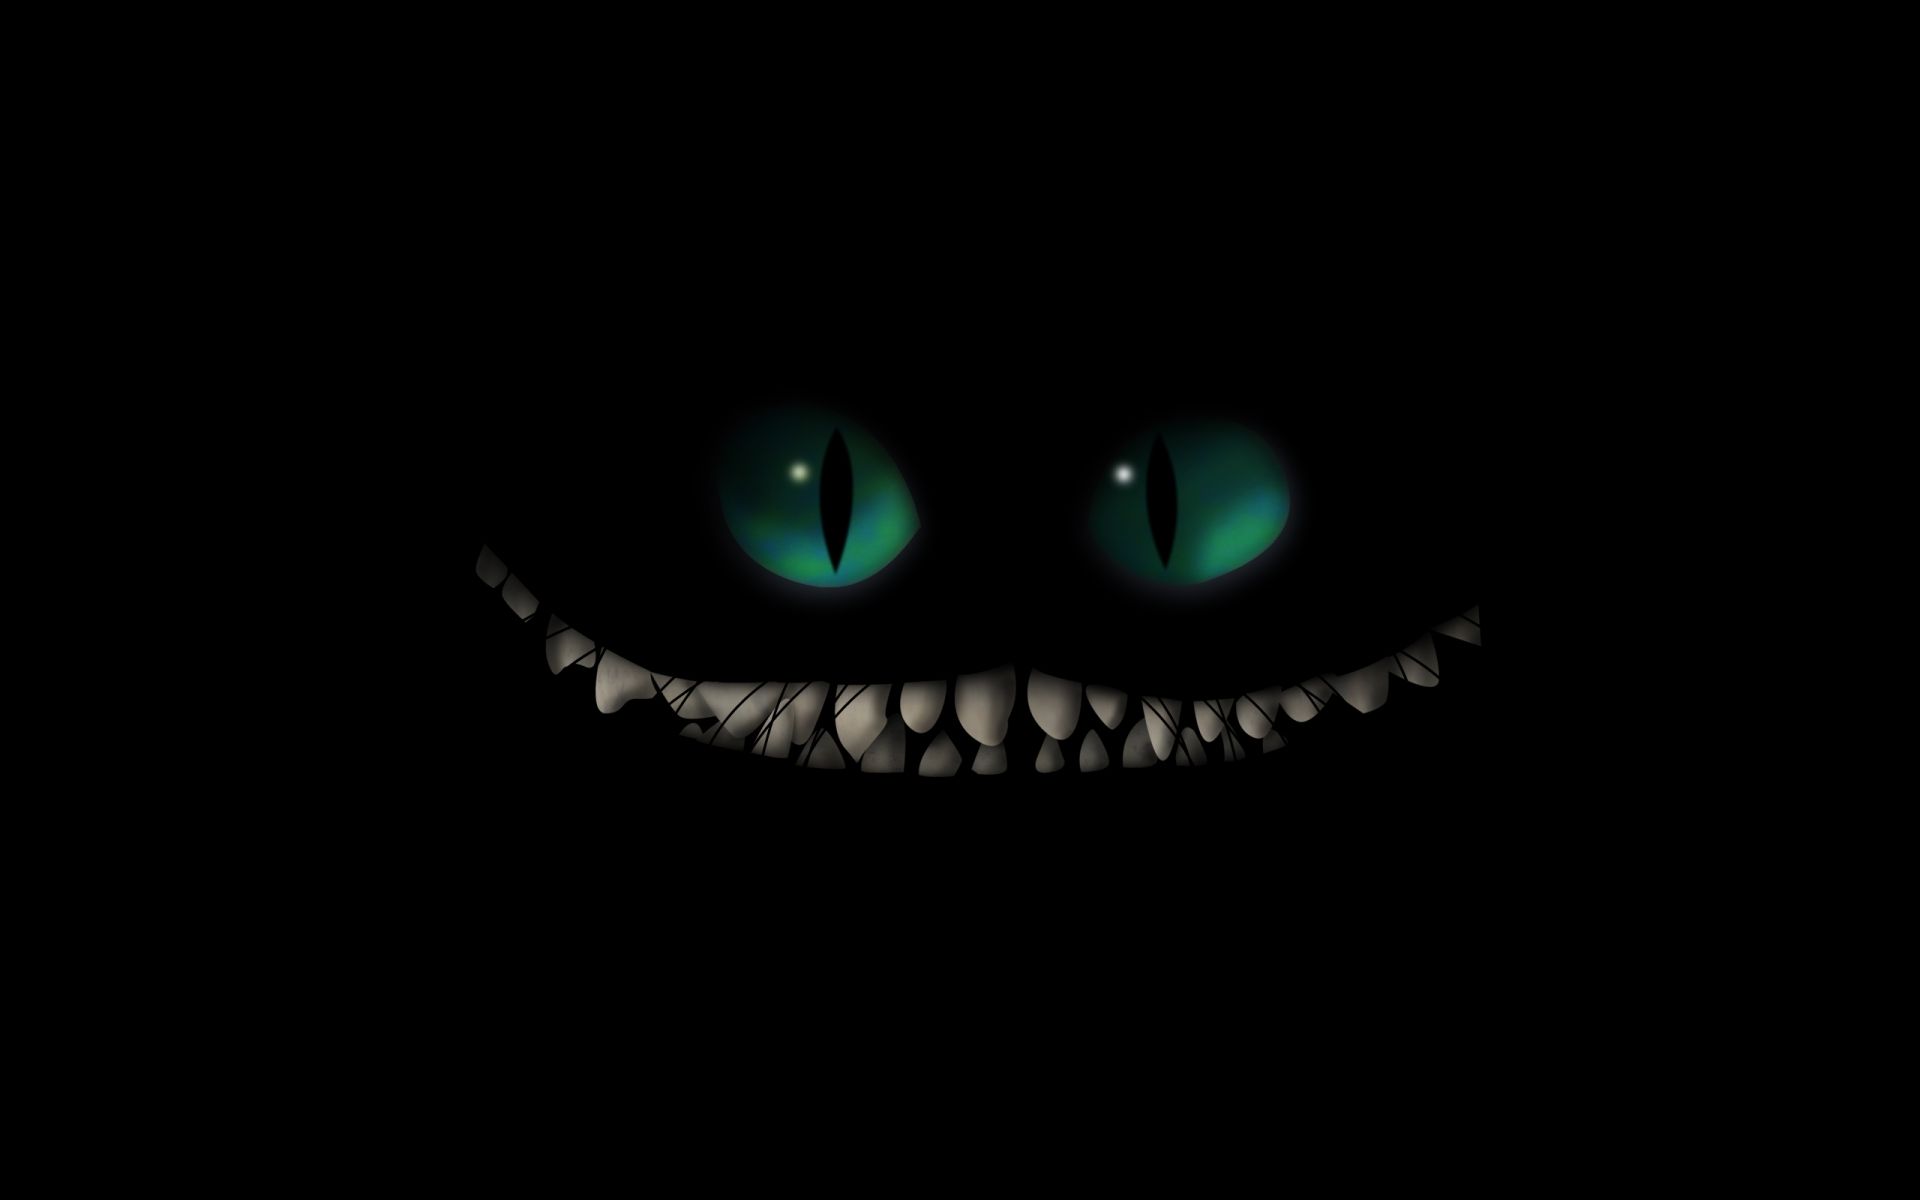 Dark monster creature fangs evil scary creepy spooky halloween wallpaperx1200. Wallpa. Cheshire cat wallpaper, Creepy background, Scary wallpaper